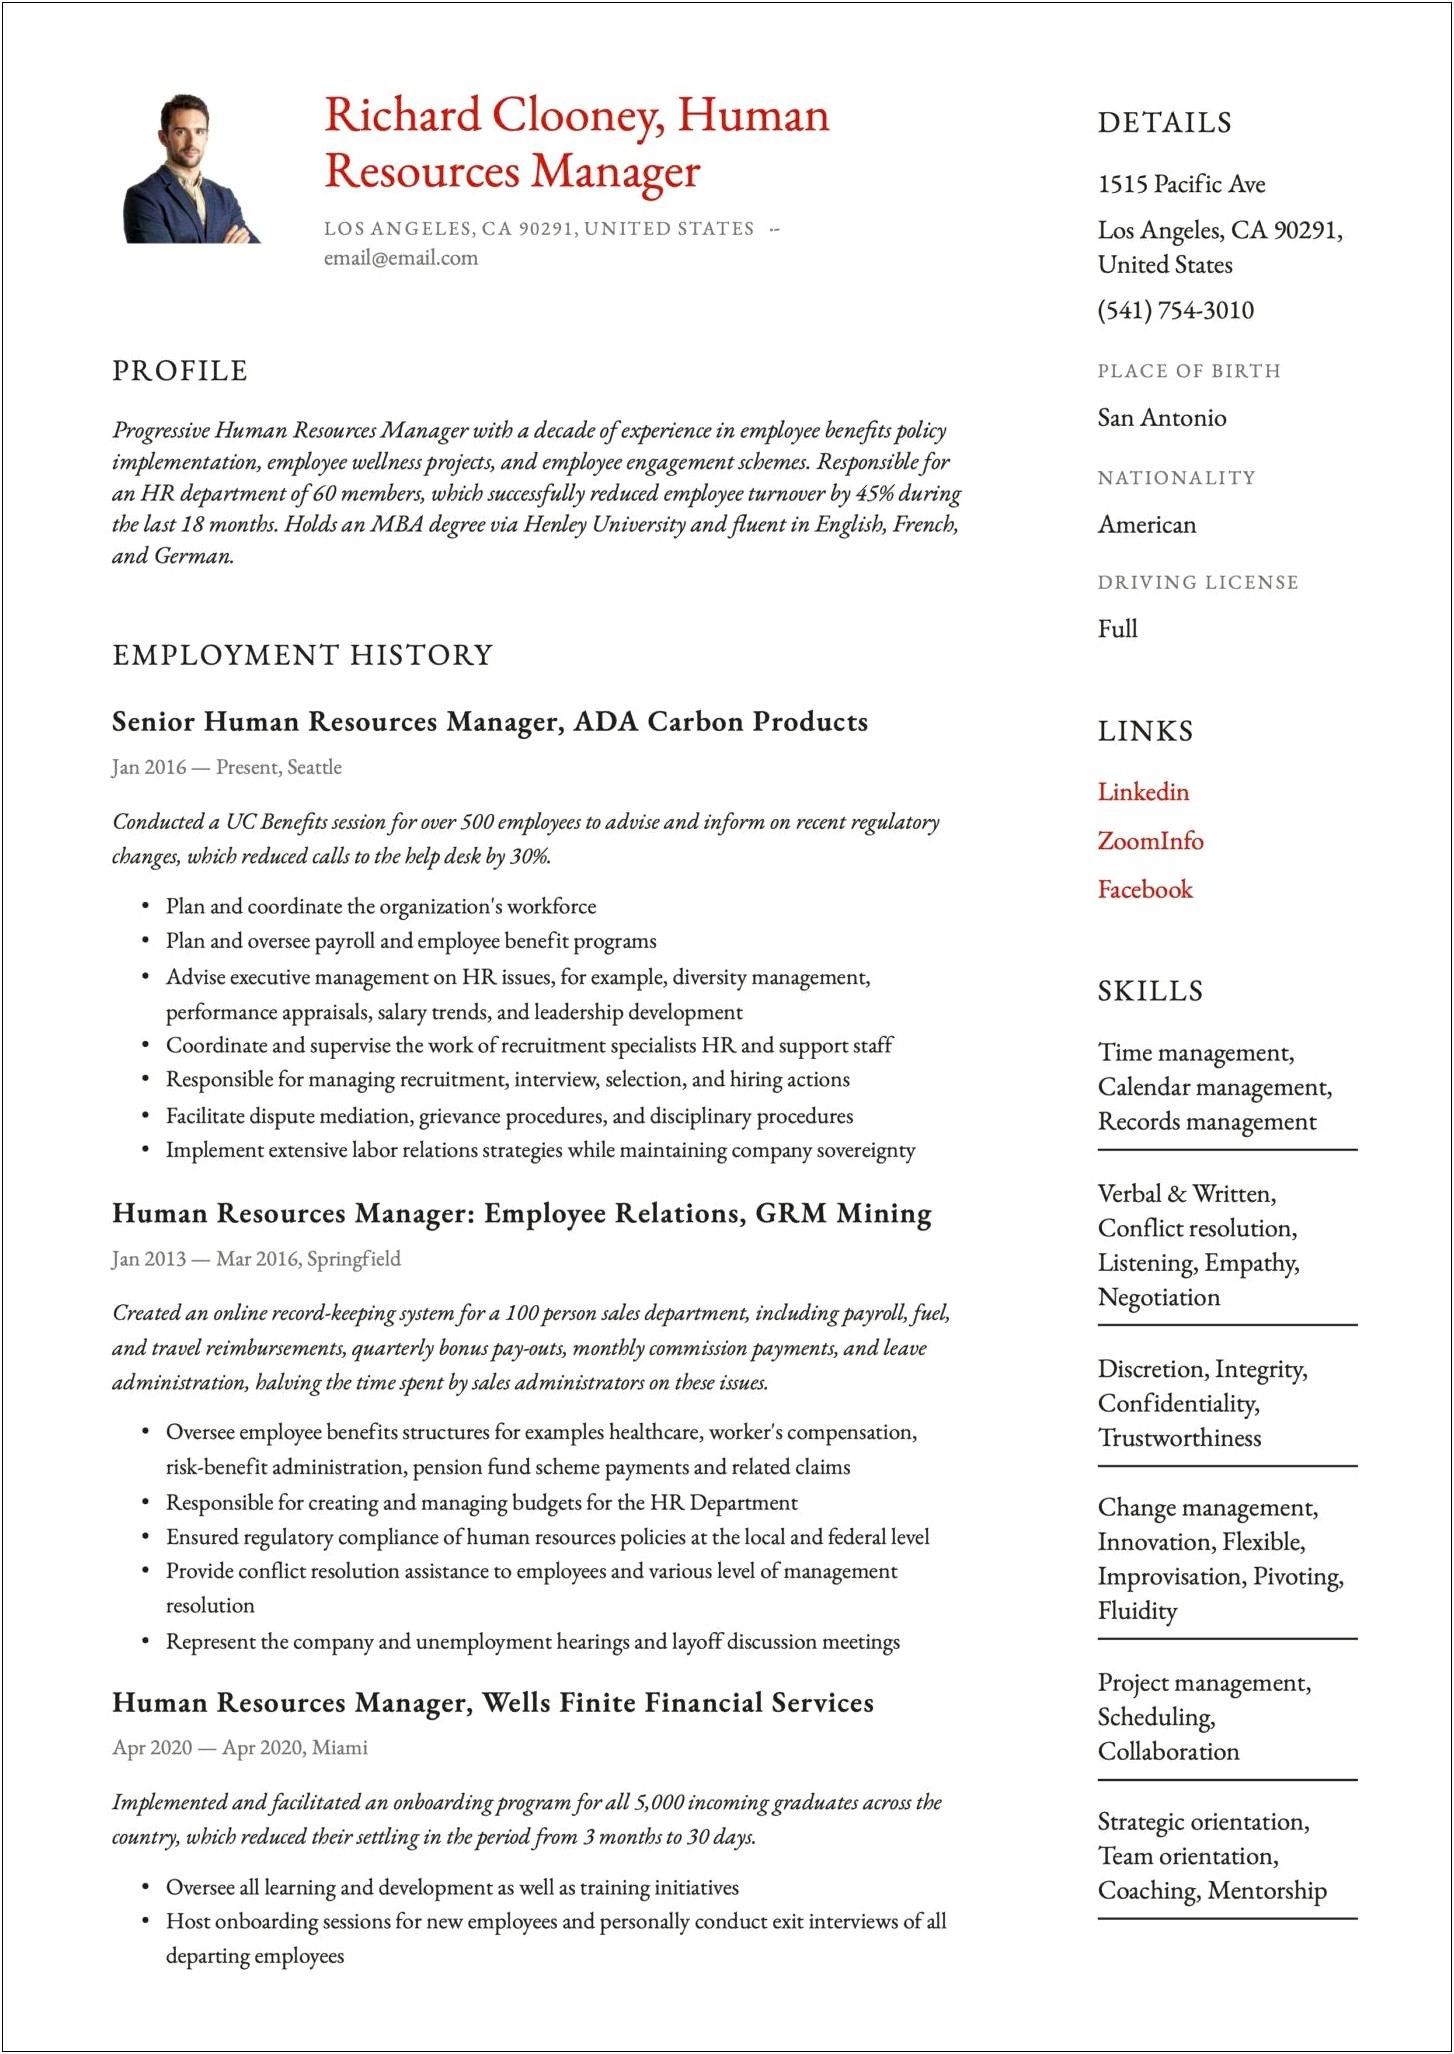 Human Resource Manager Job Description For Resume